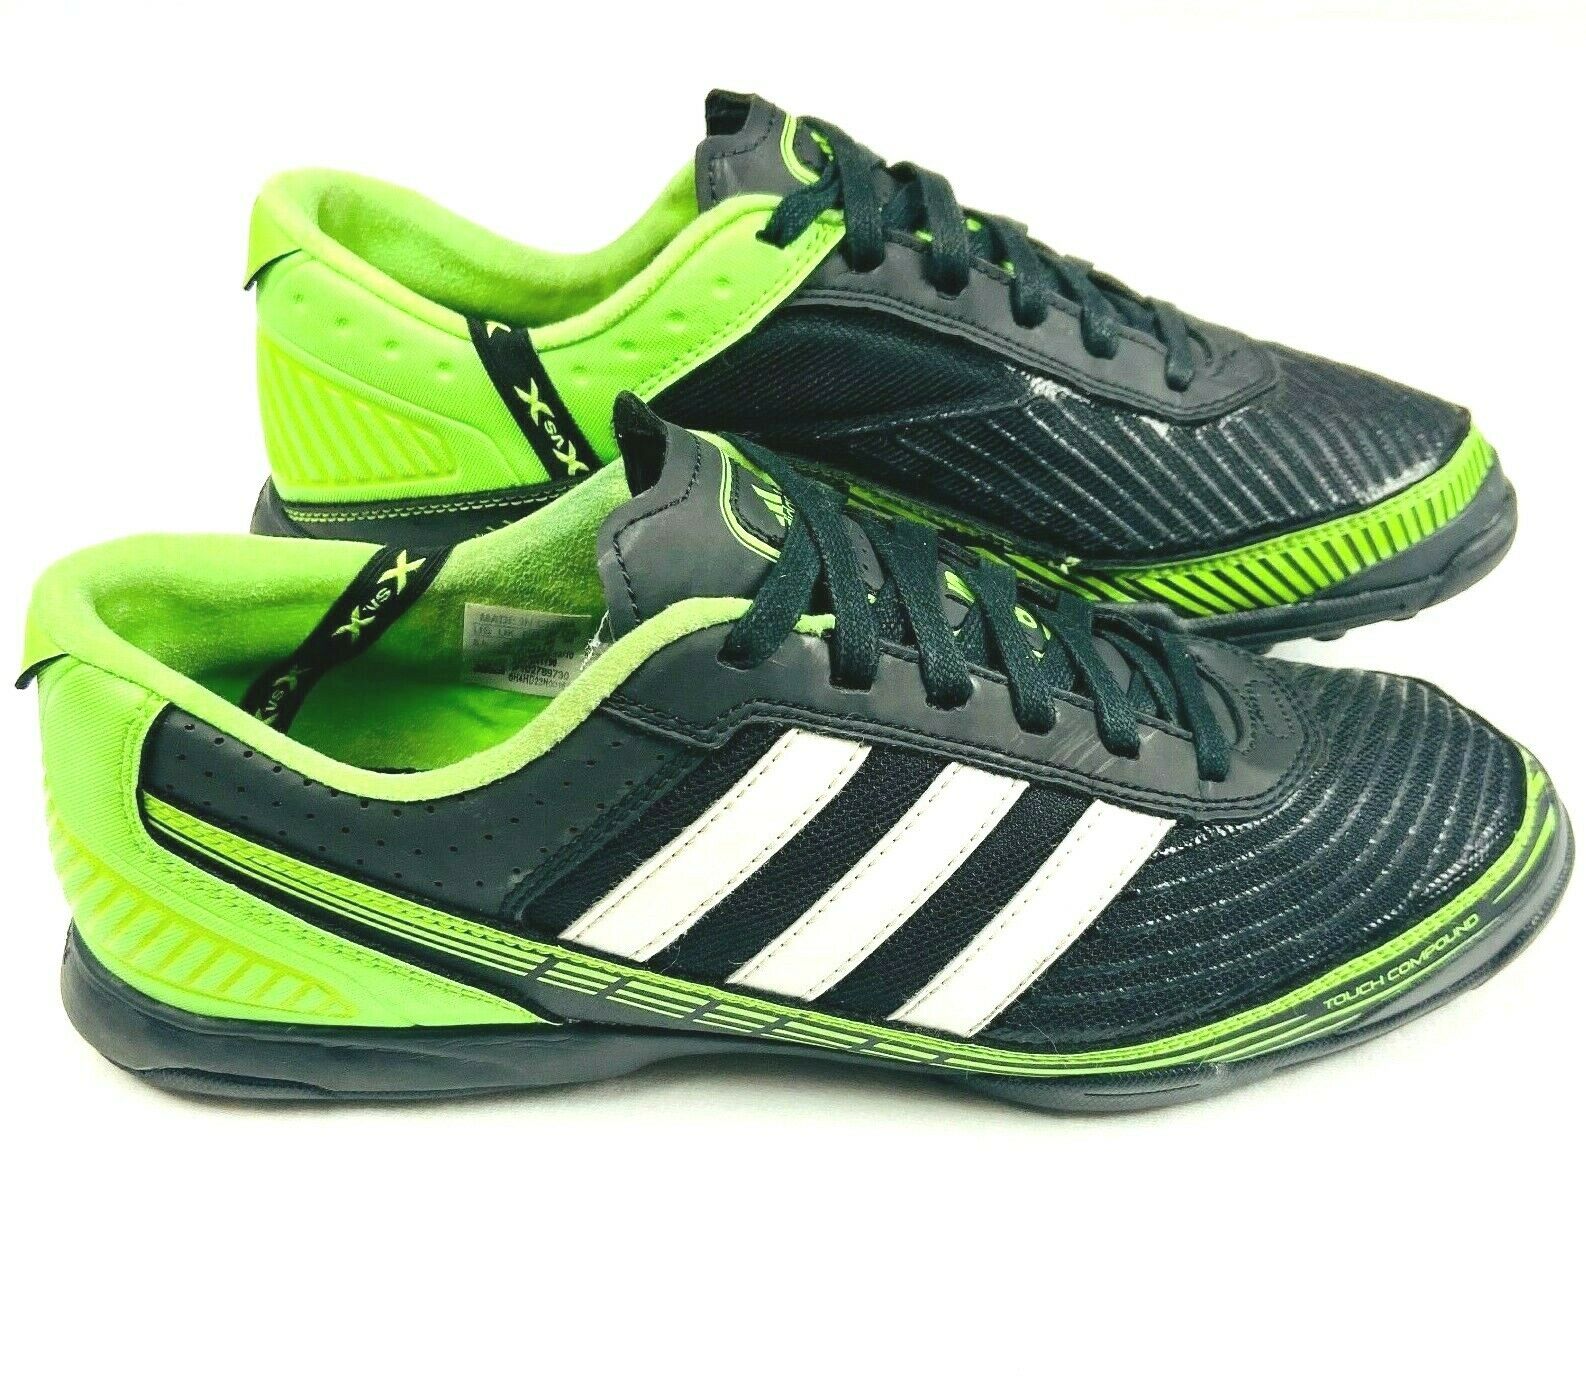 Adidas Adi5 XvsX Indoor Soccer Turf Shoes Men's Size10.5 Black/Green